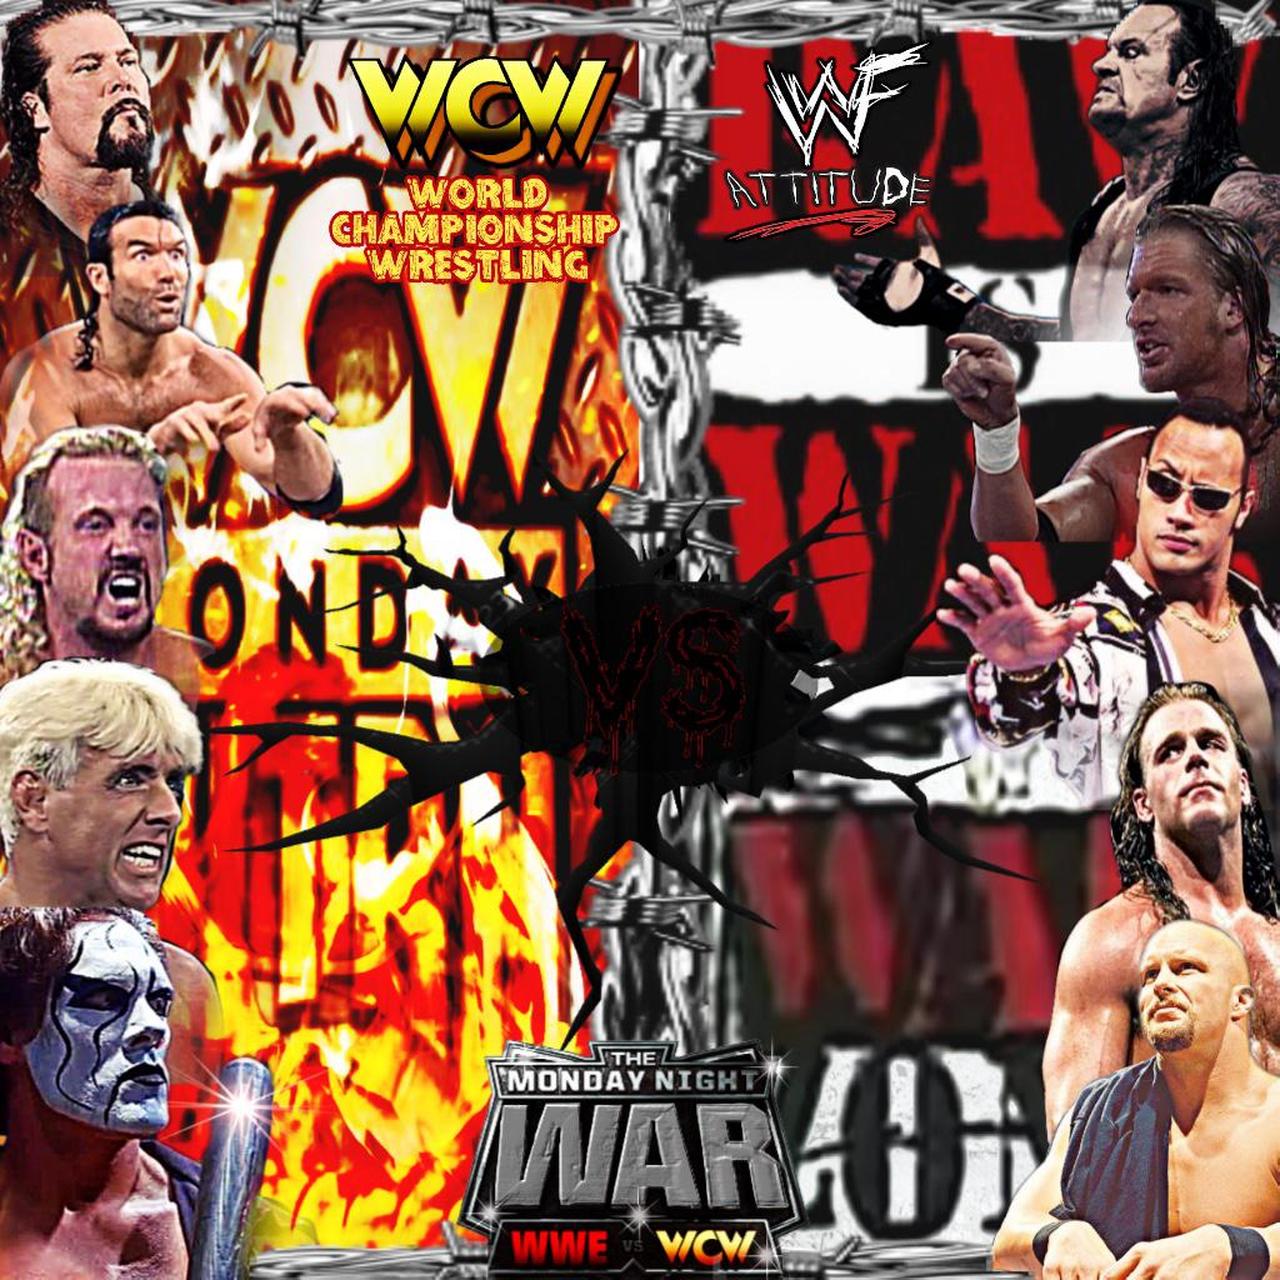 ECW TNA Full episode collection WWE Online Membership WCW WWF 